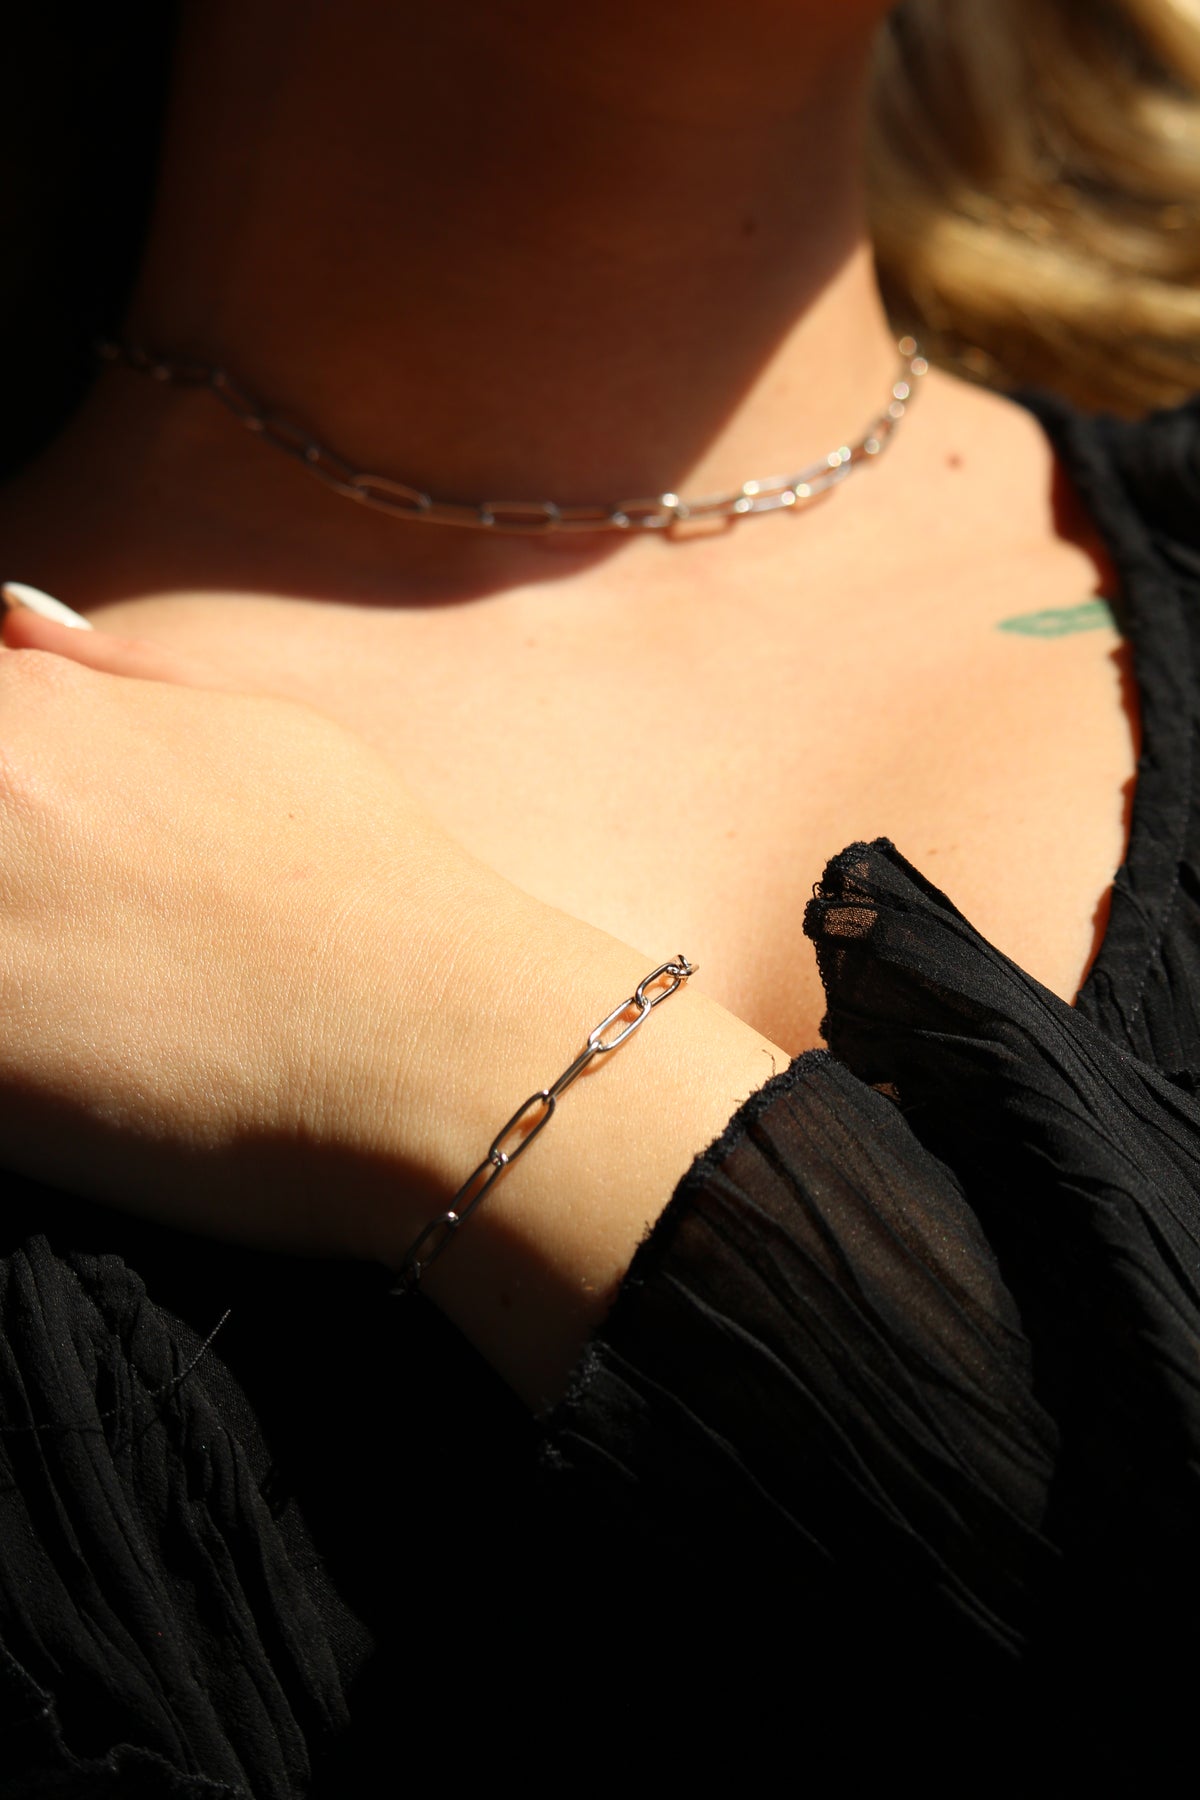 SET: LINK (necklace + bracelet)